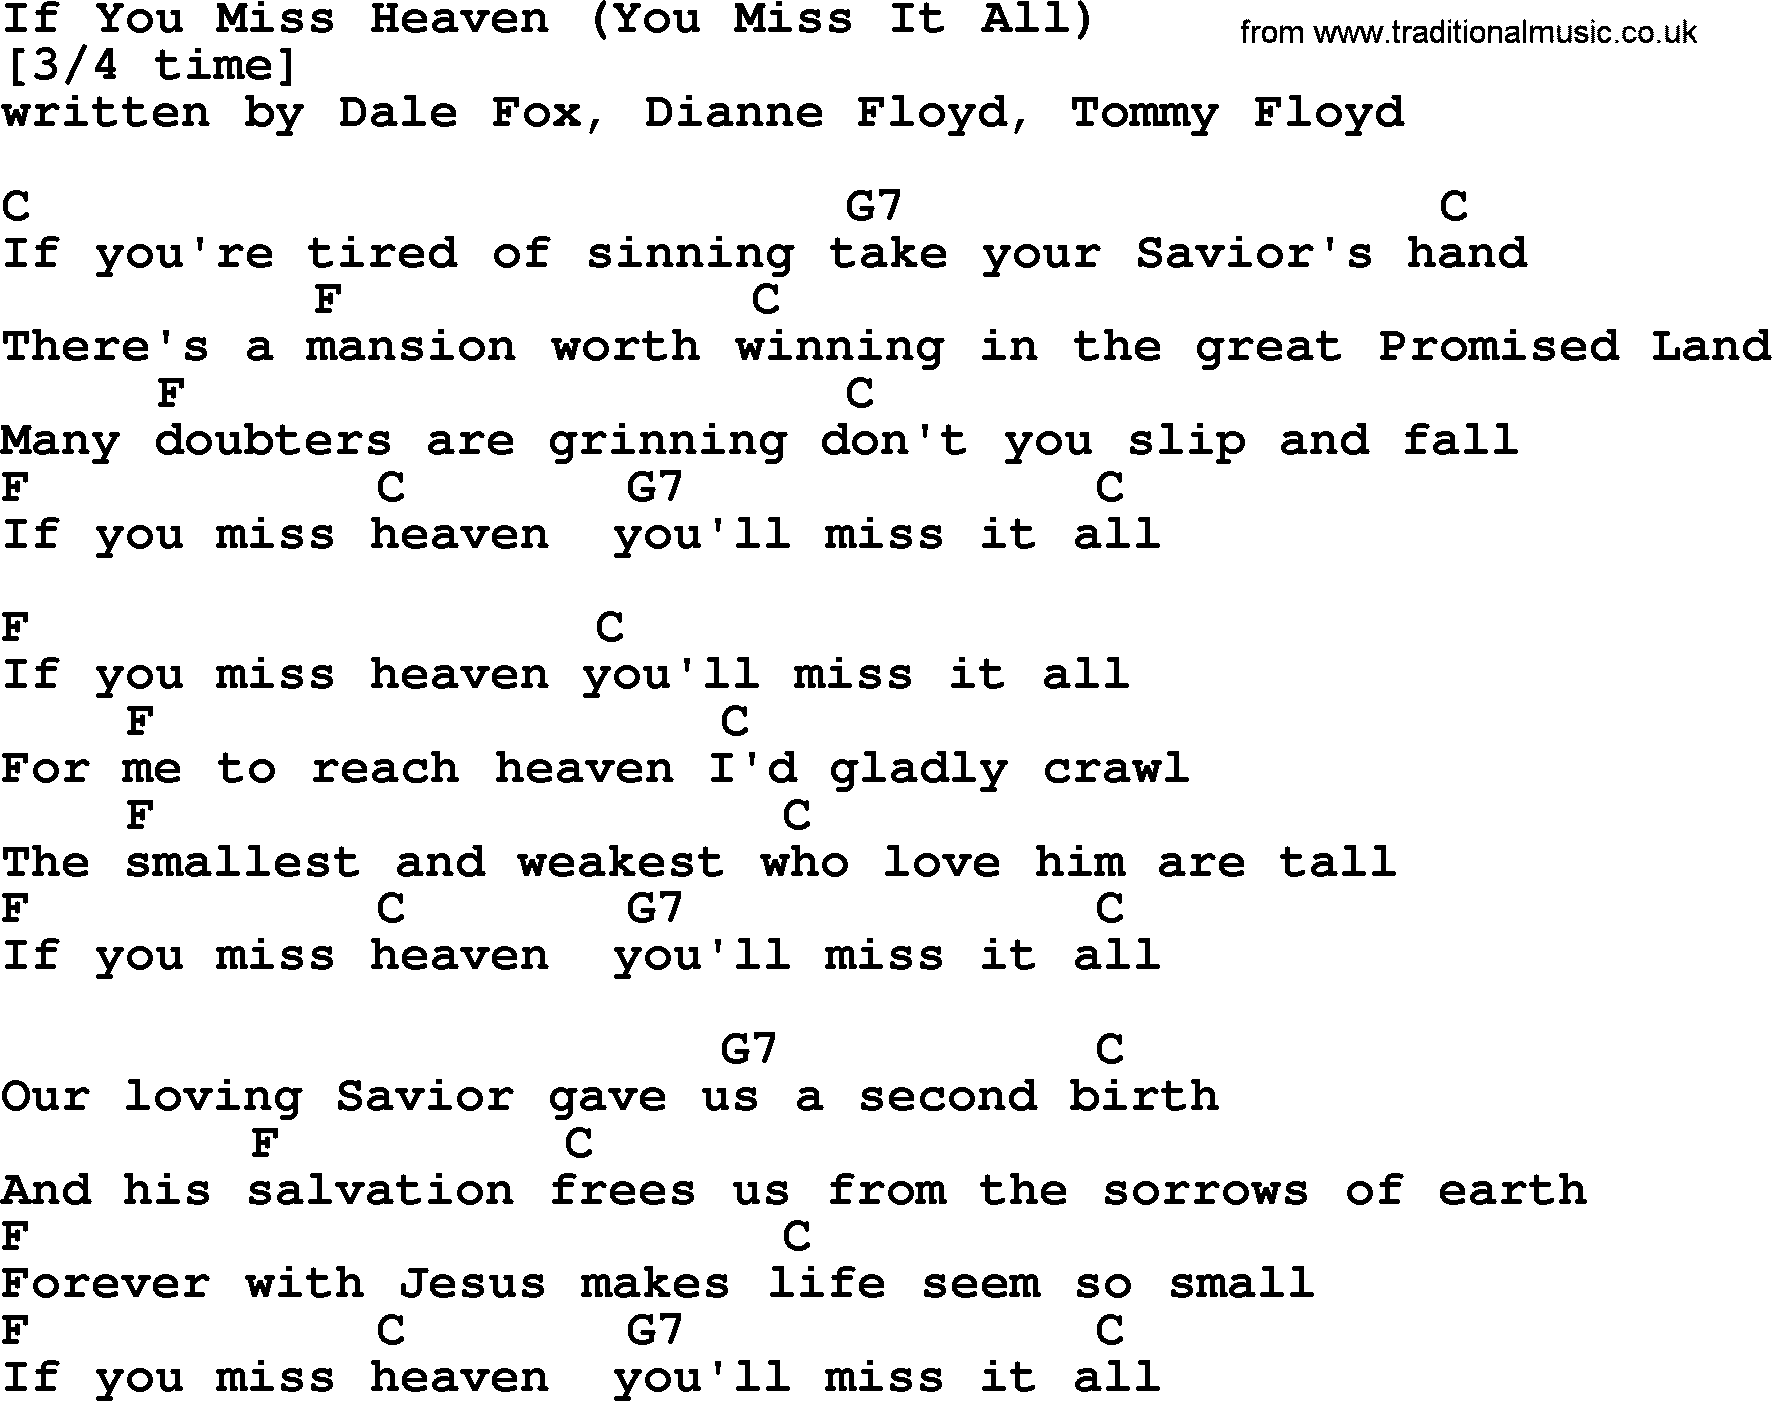 Loretta Lynn song: If You Miss Heaven _you Miss It All_ lyrics and chords